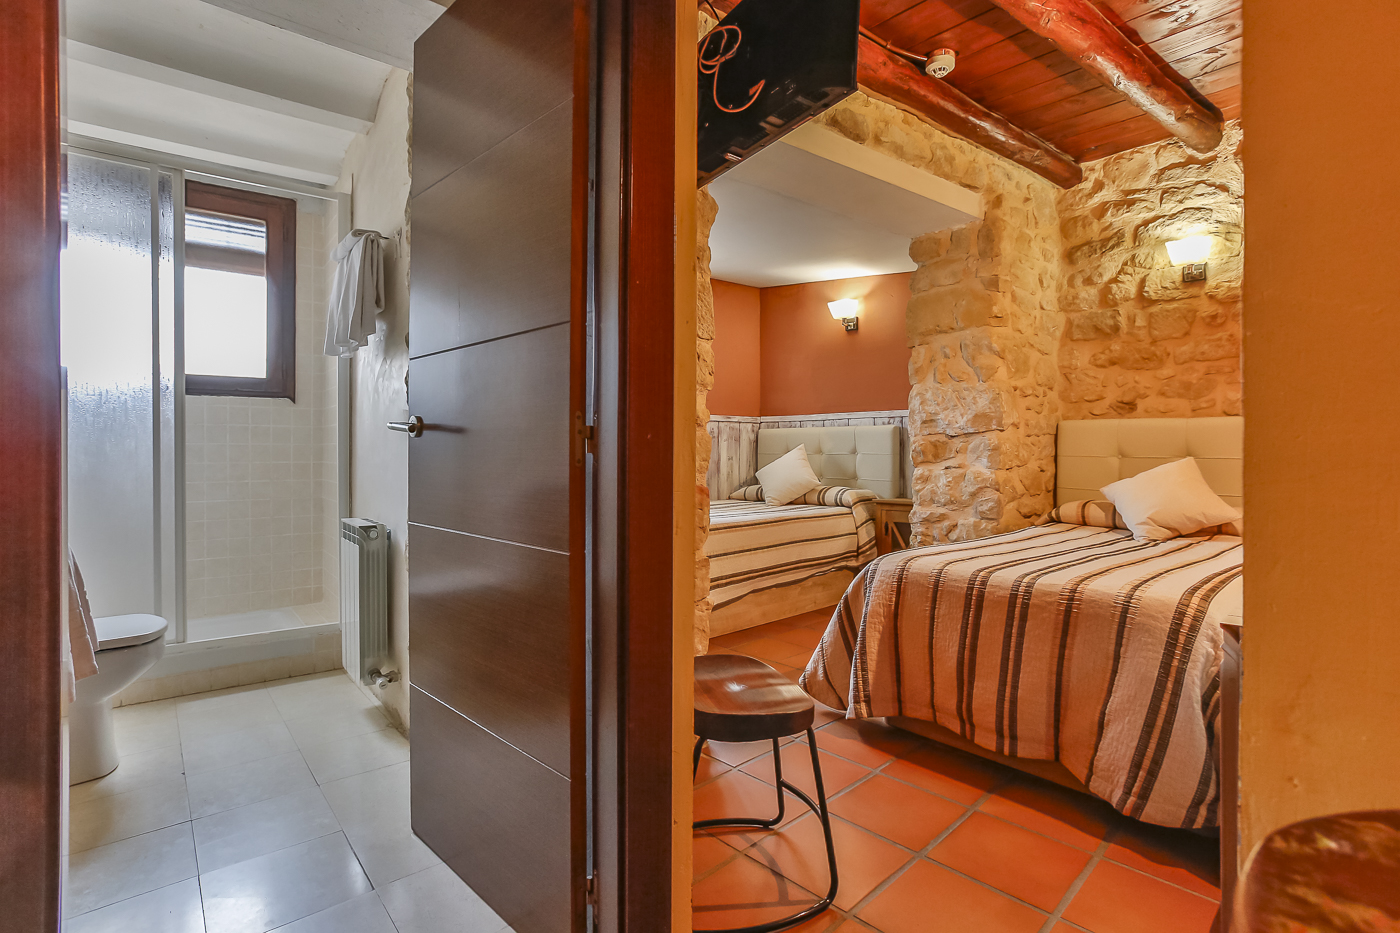 Rural Hotel in Spanish Tuscany